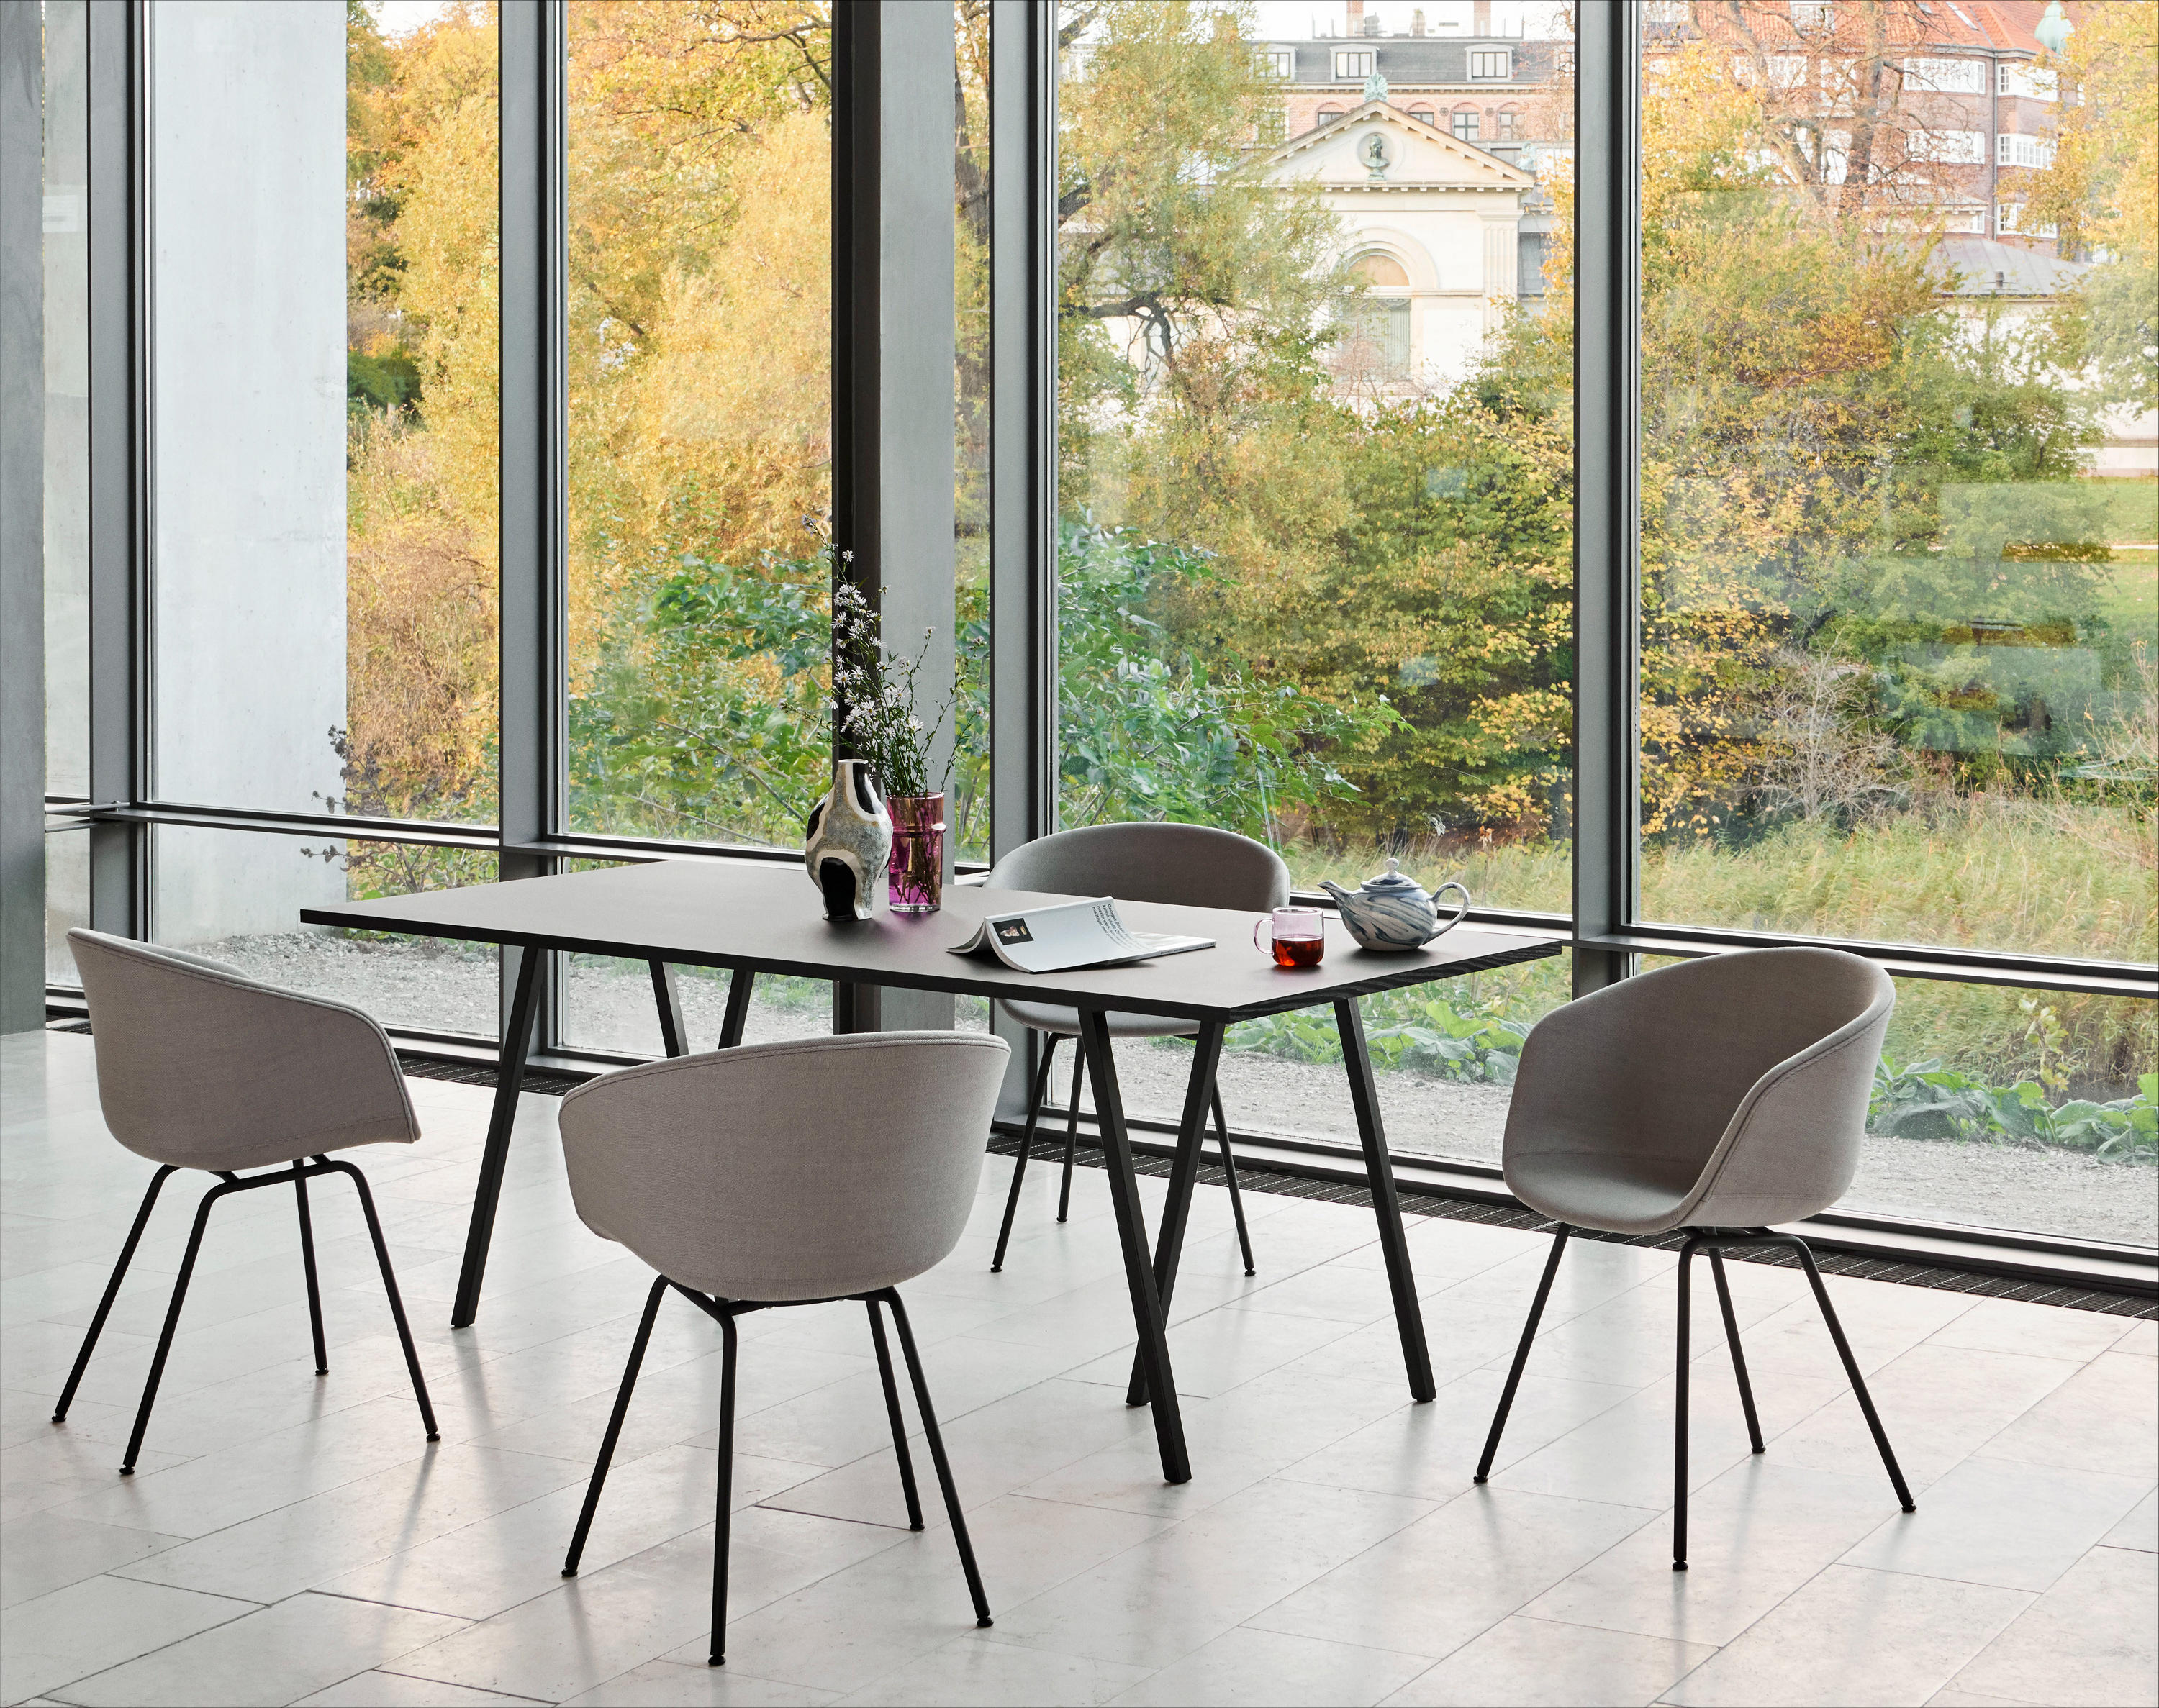 Stand 200 & designer furniture | Architonic